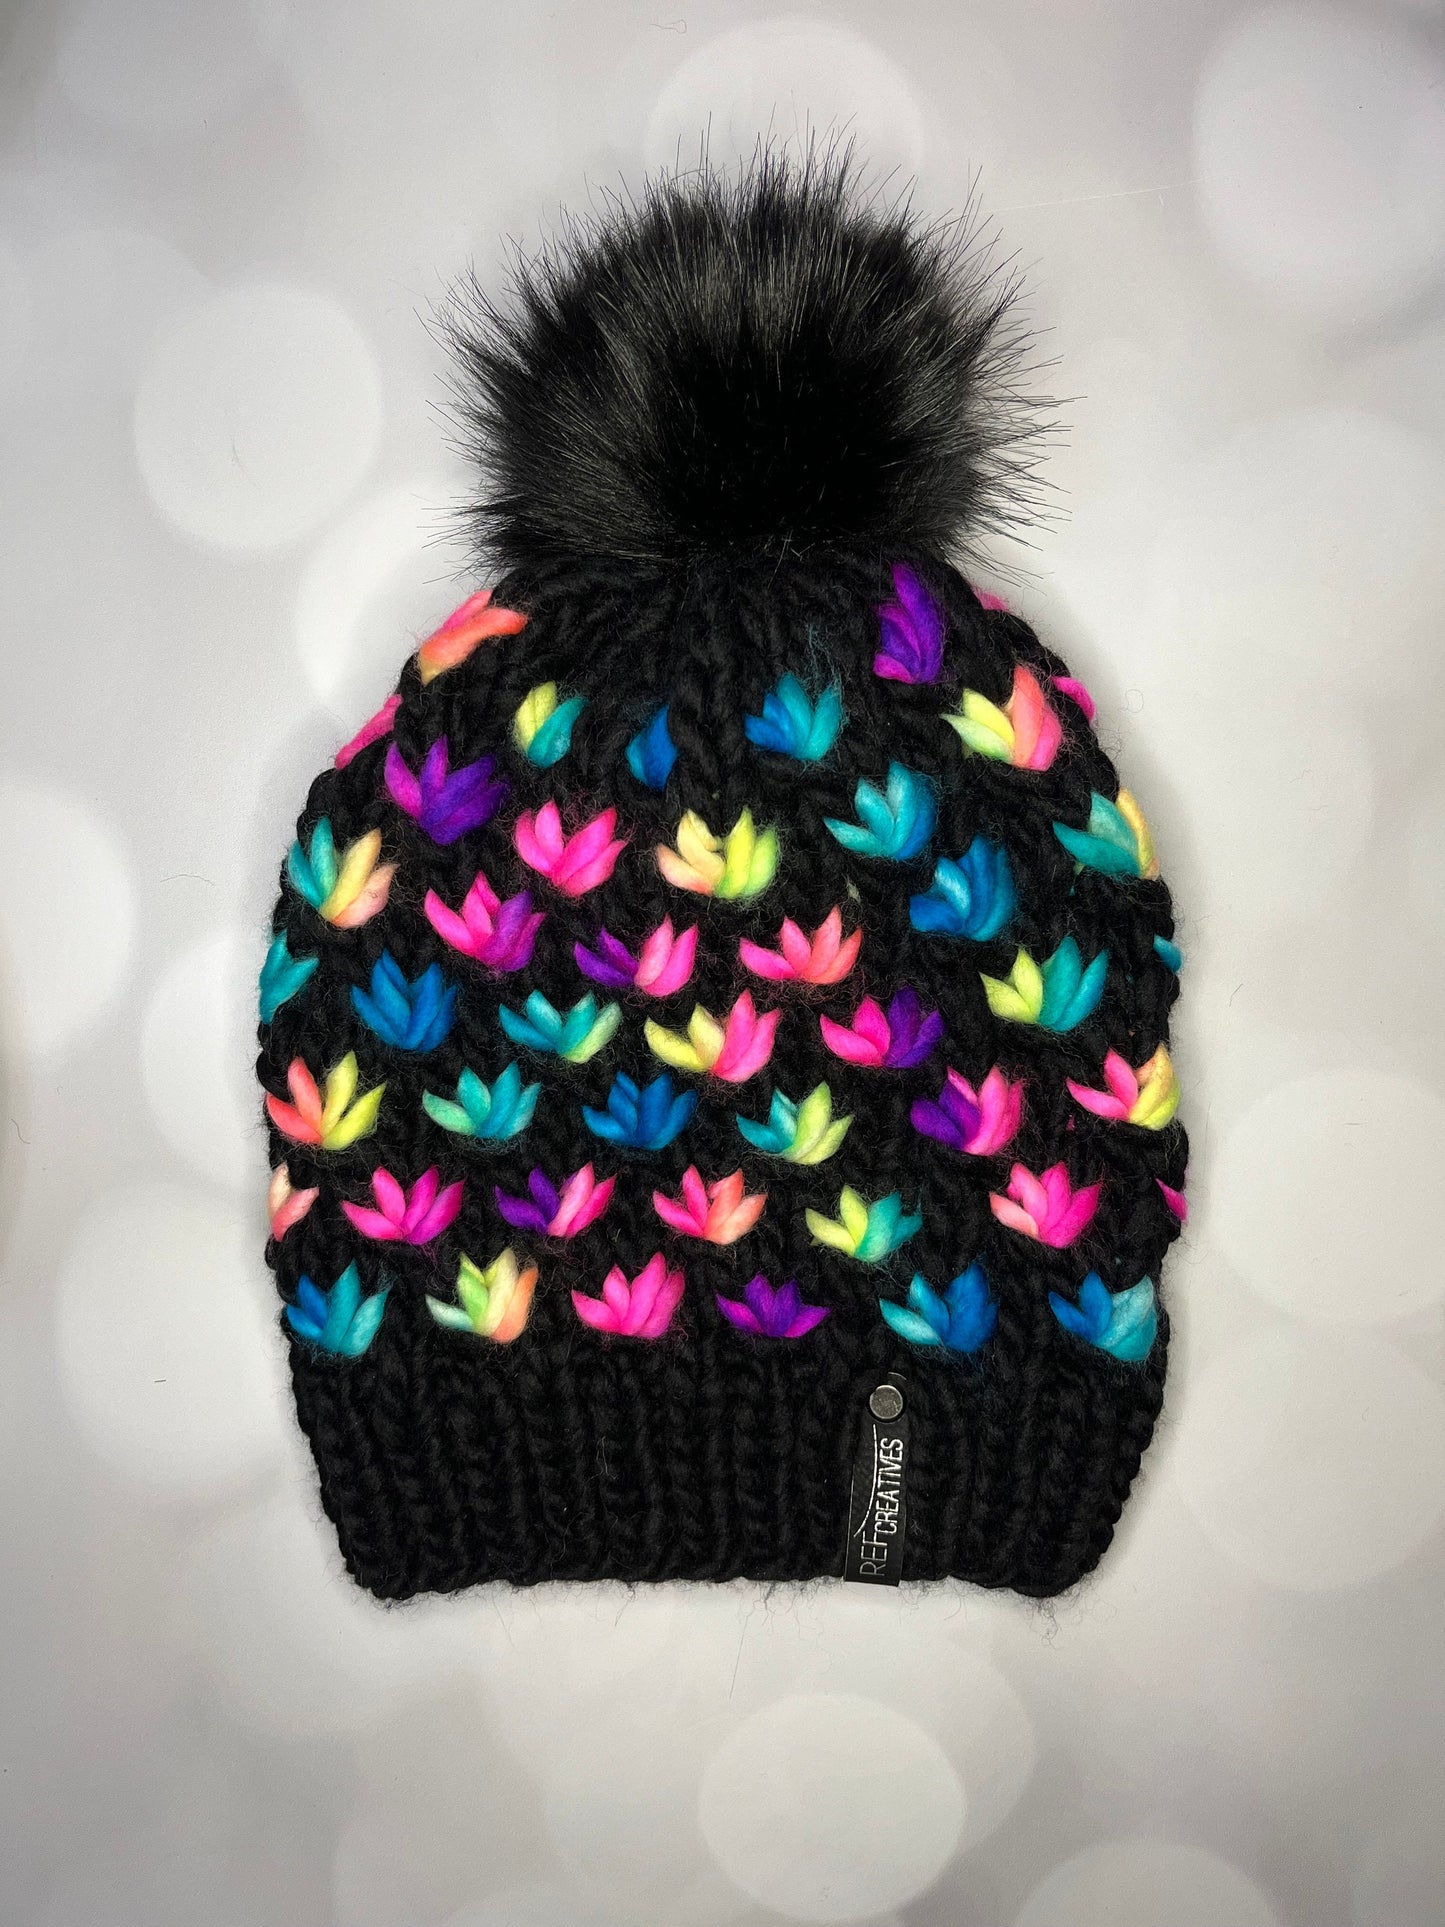 Luxury Rainbow Merino Wool Knit Hat - Black and Rainbow Lotus Flower Beanie Hand Knit Hat with Hand Dyed Yarn